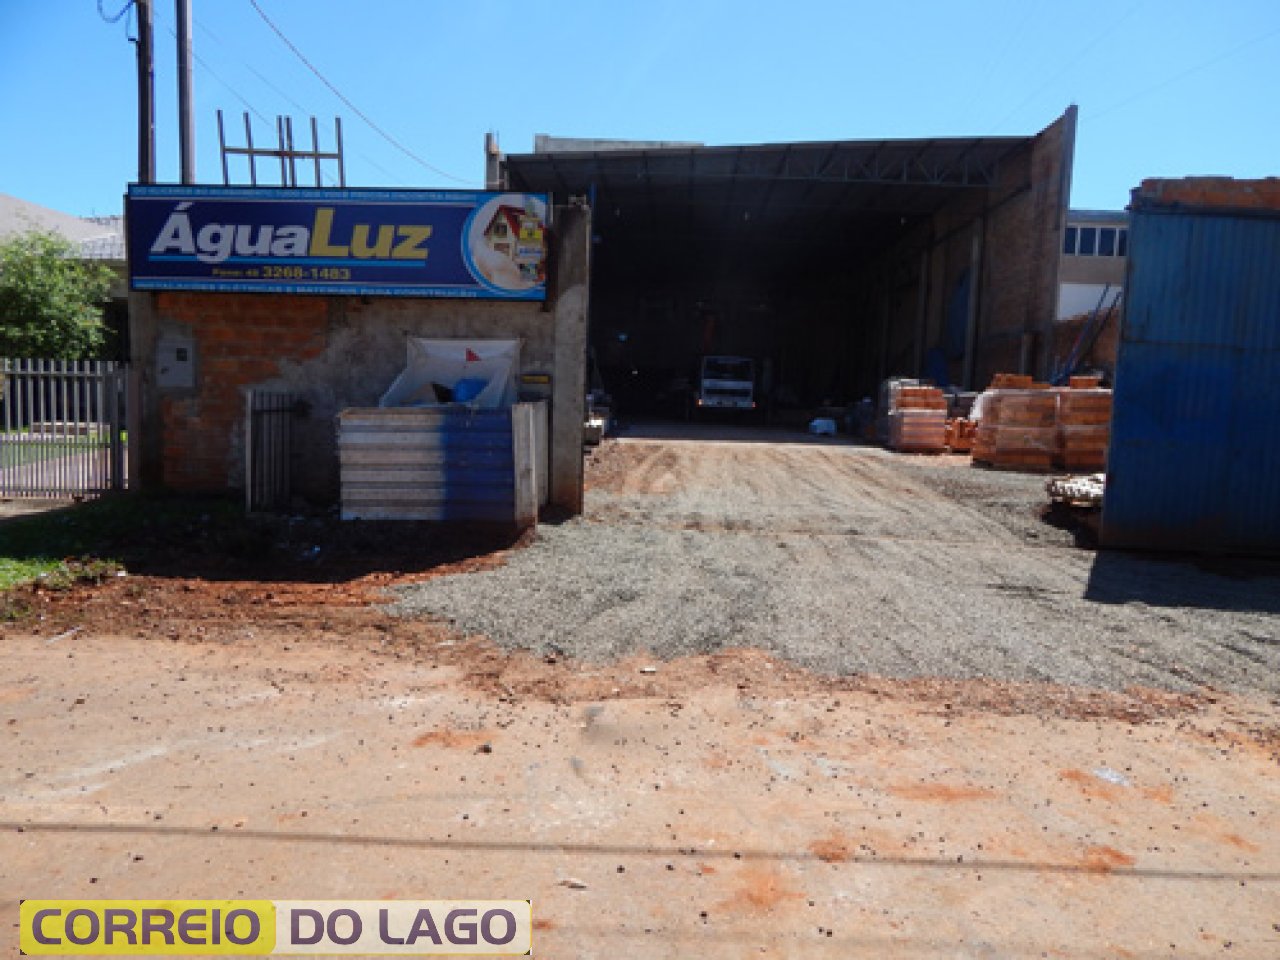 Outro terreno da Skol, atualmente fundos da empresa ÁguaLuz. Foto/2014.